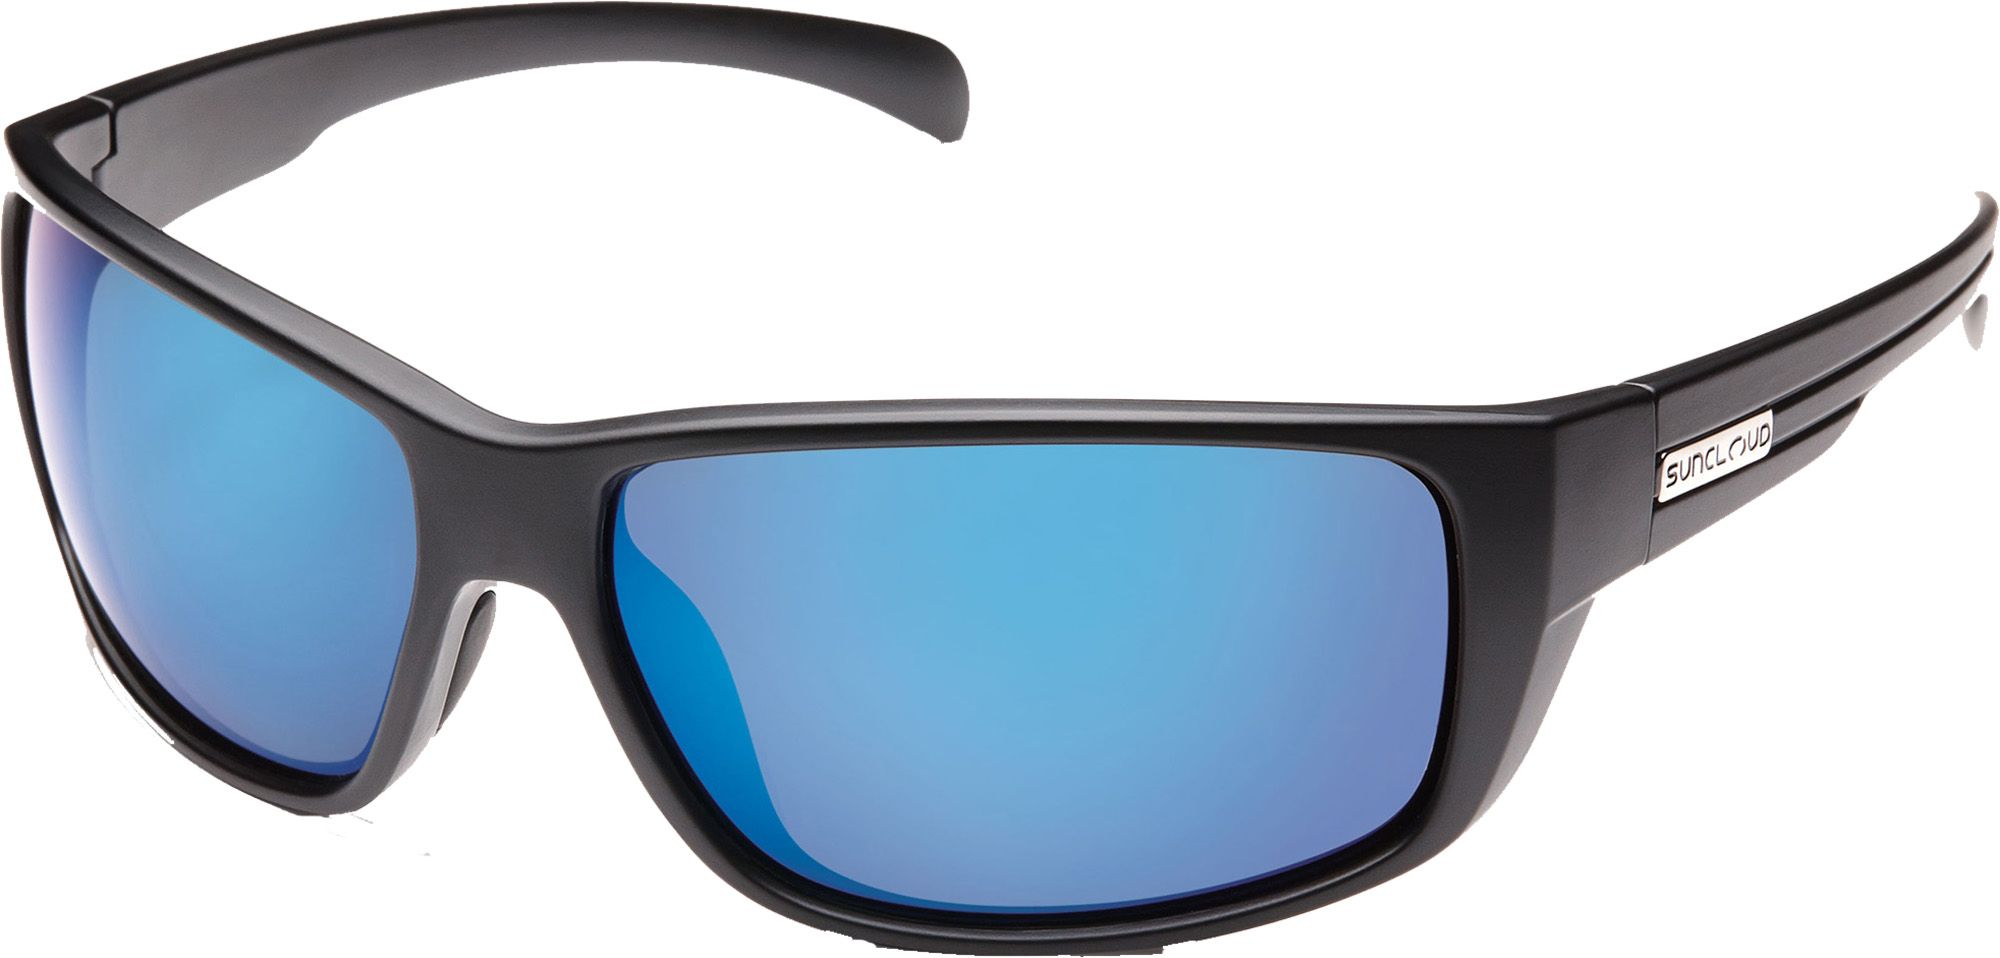 Photos - Sunglasses Suncloud Milestone Polarized , Men's, Black/Blue 17AF9AMLSTNBLKG